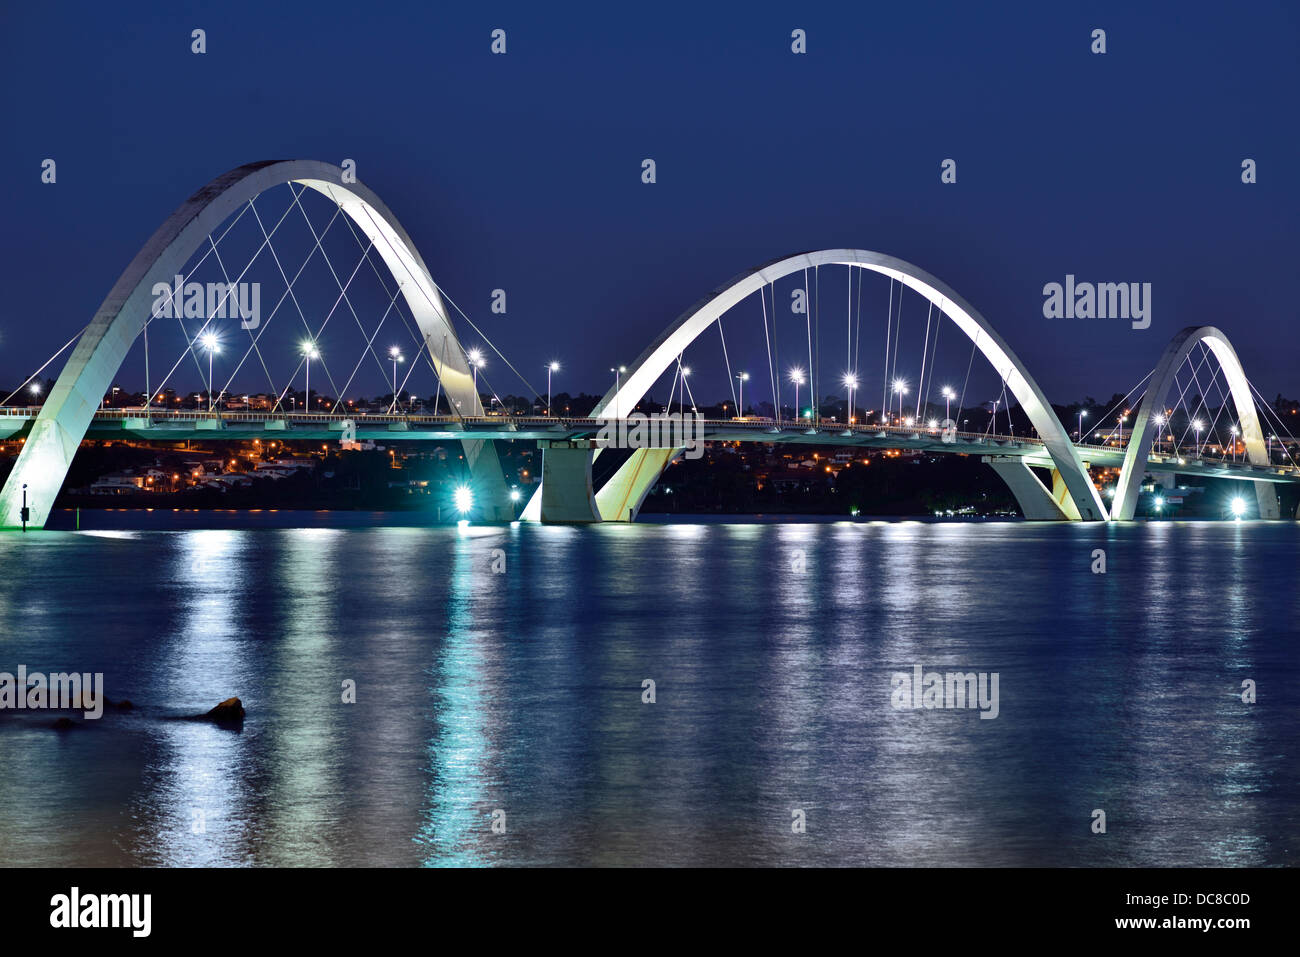 Brasil, Brasilia: Jucelino-Kubitschek-Puente sobre el lago Paranoá bei noche Foto de stock